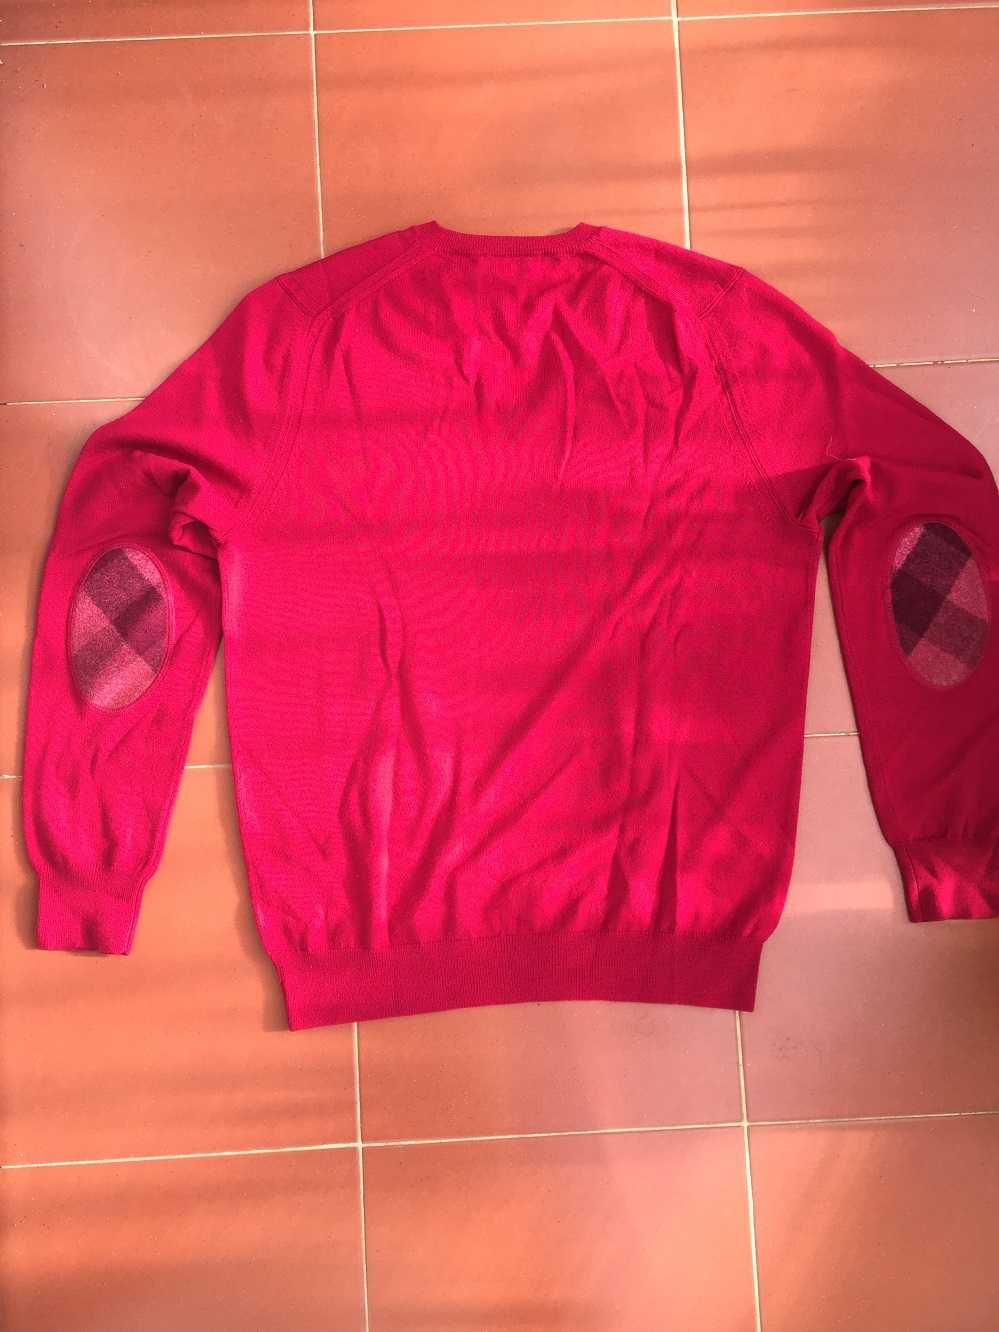 BURBERRY original -- Camisola / Sweater -- Tamanho XL -- Unisexo